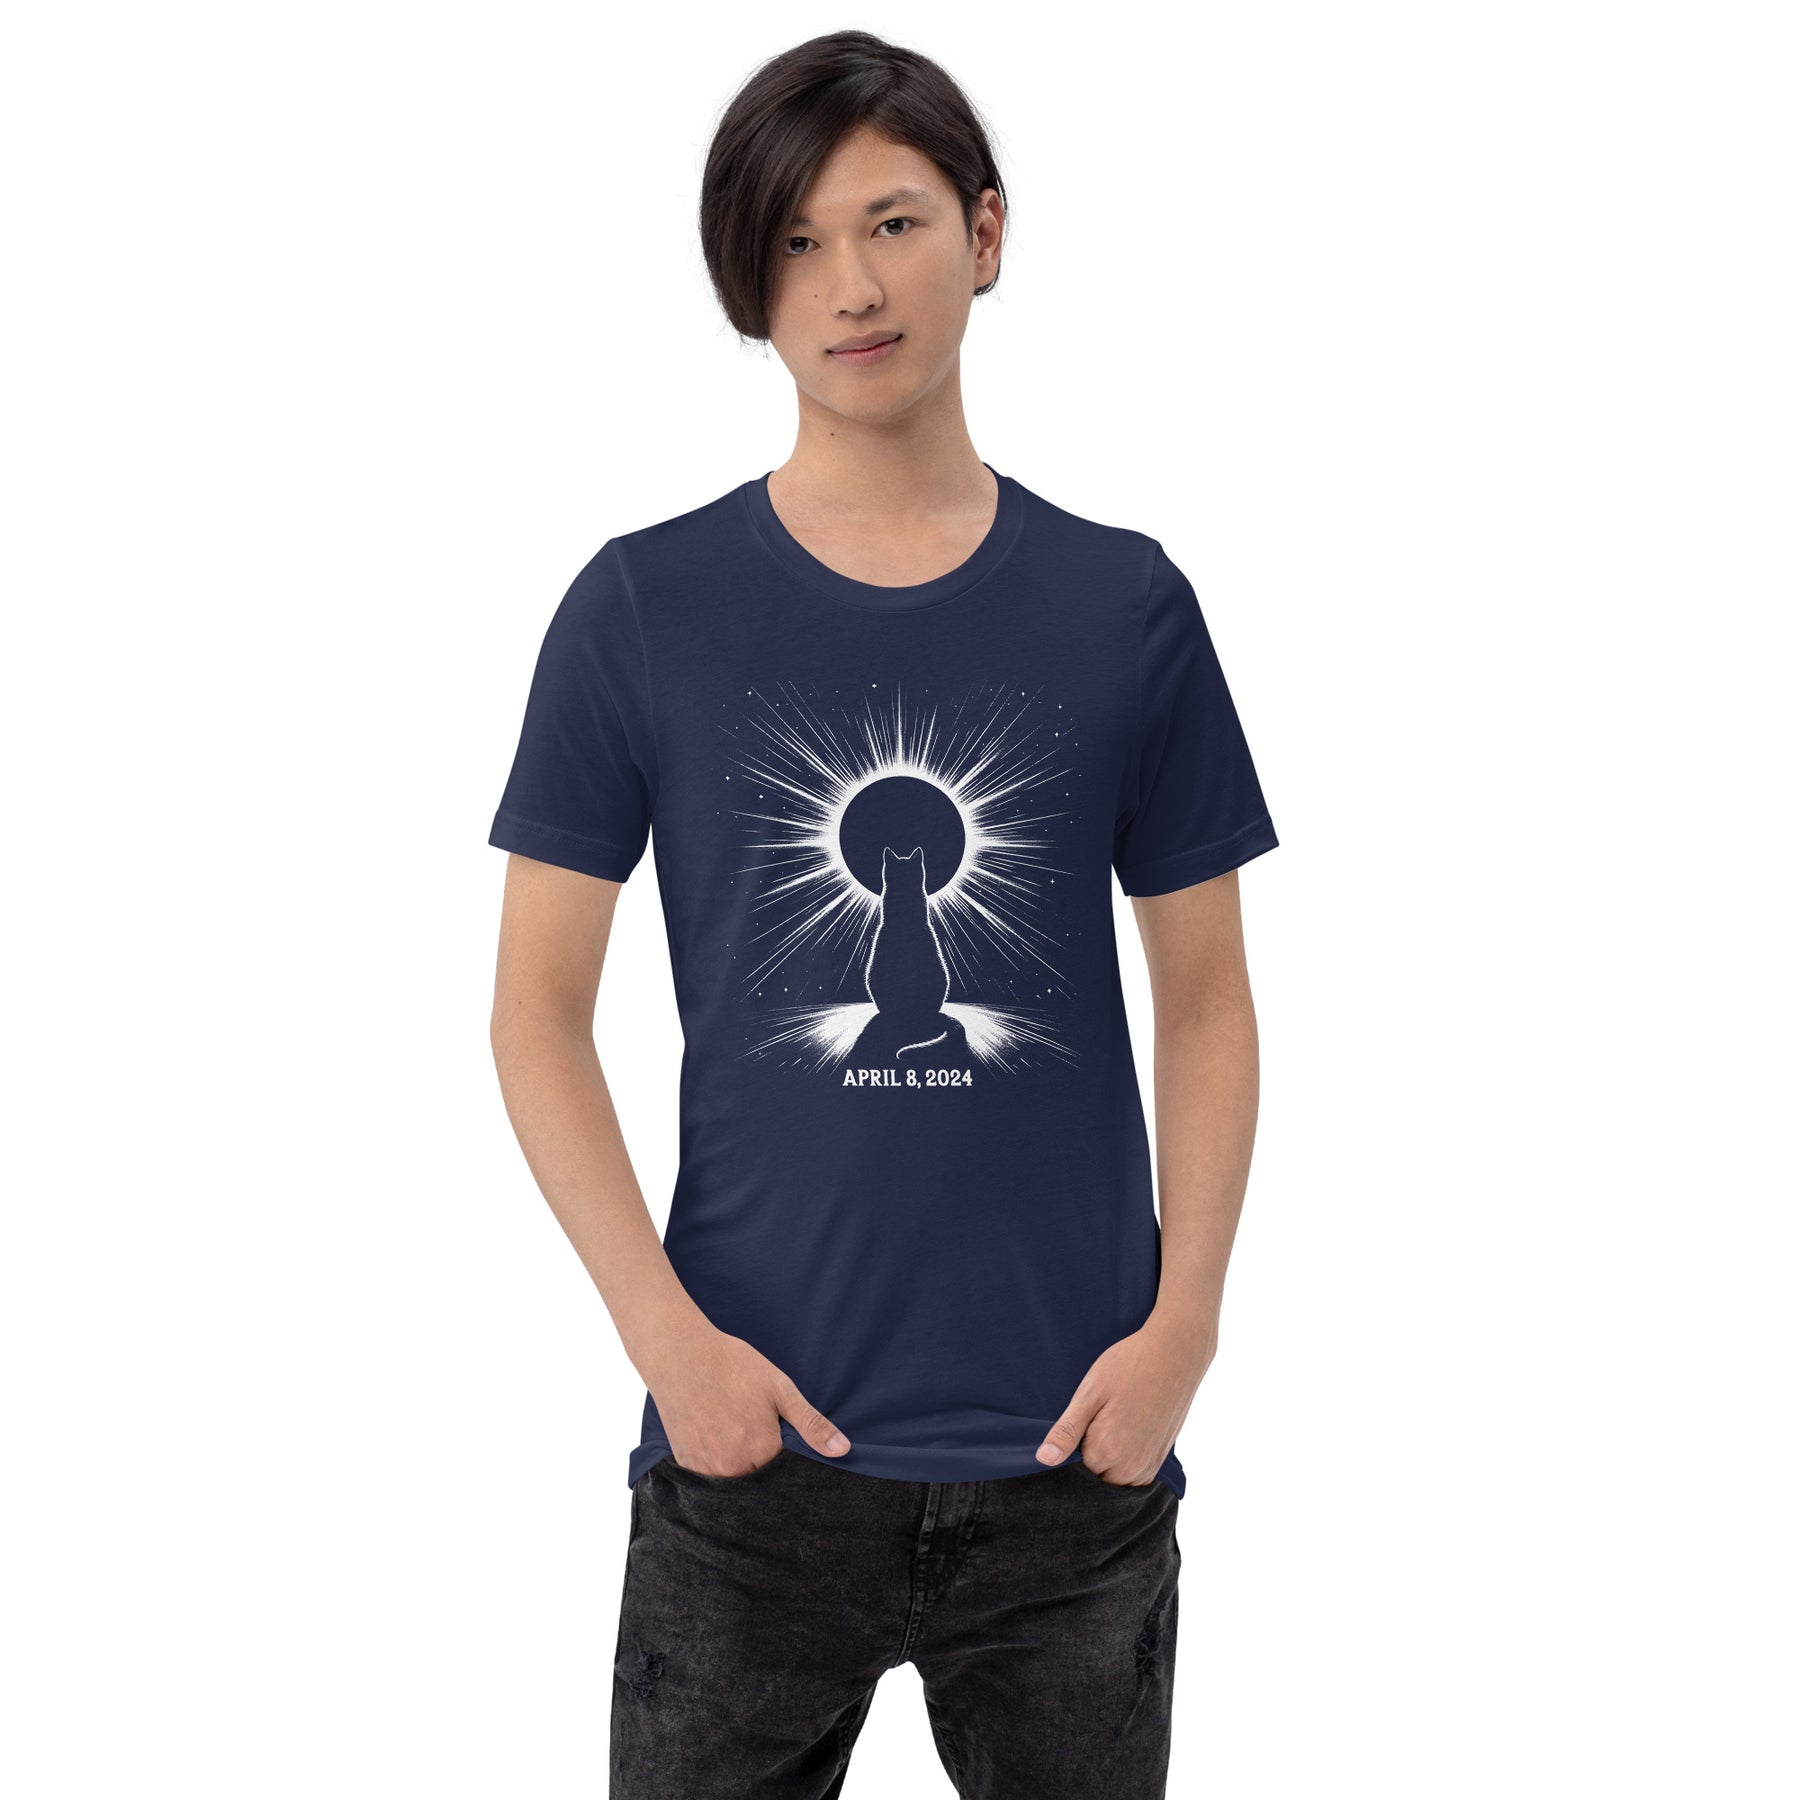 Total Solar Eclipse 2024 Cat Shirt, April 8 Eclipse Viewer Souvenir, Feline Lover Tee, Moon Astronomy Gift